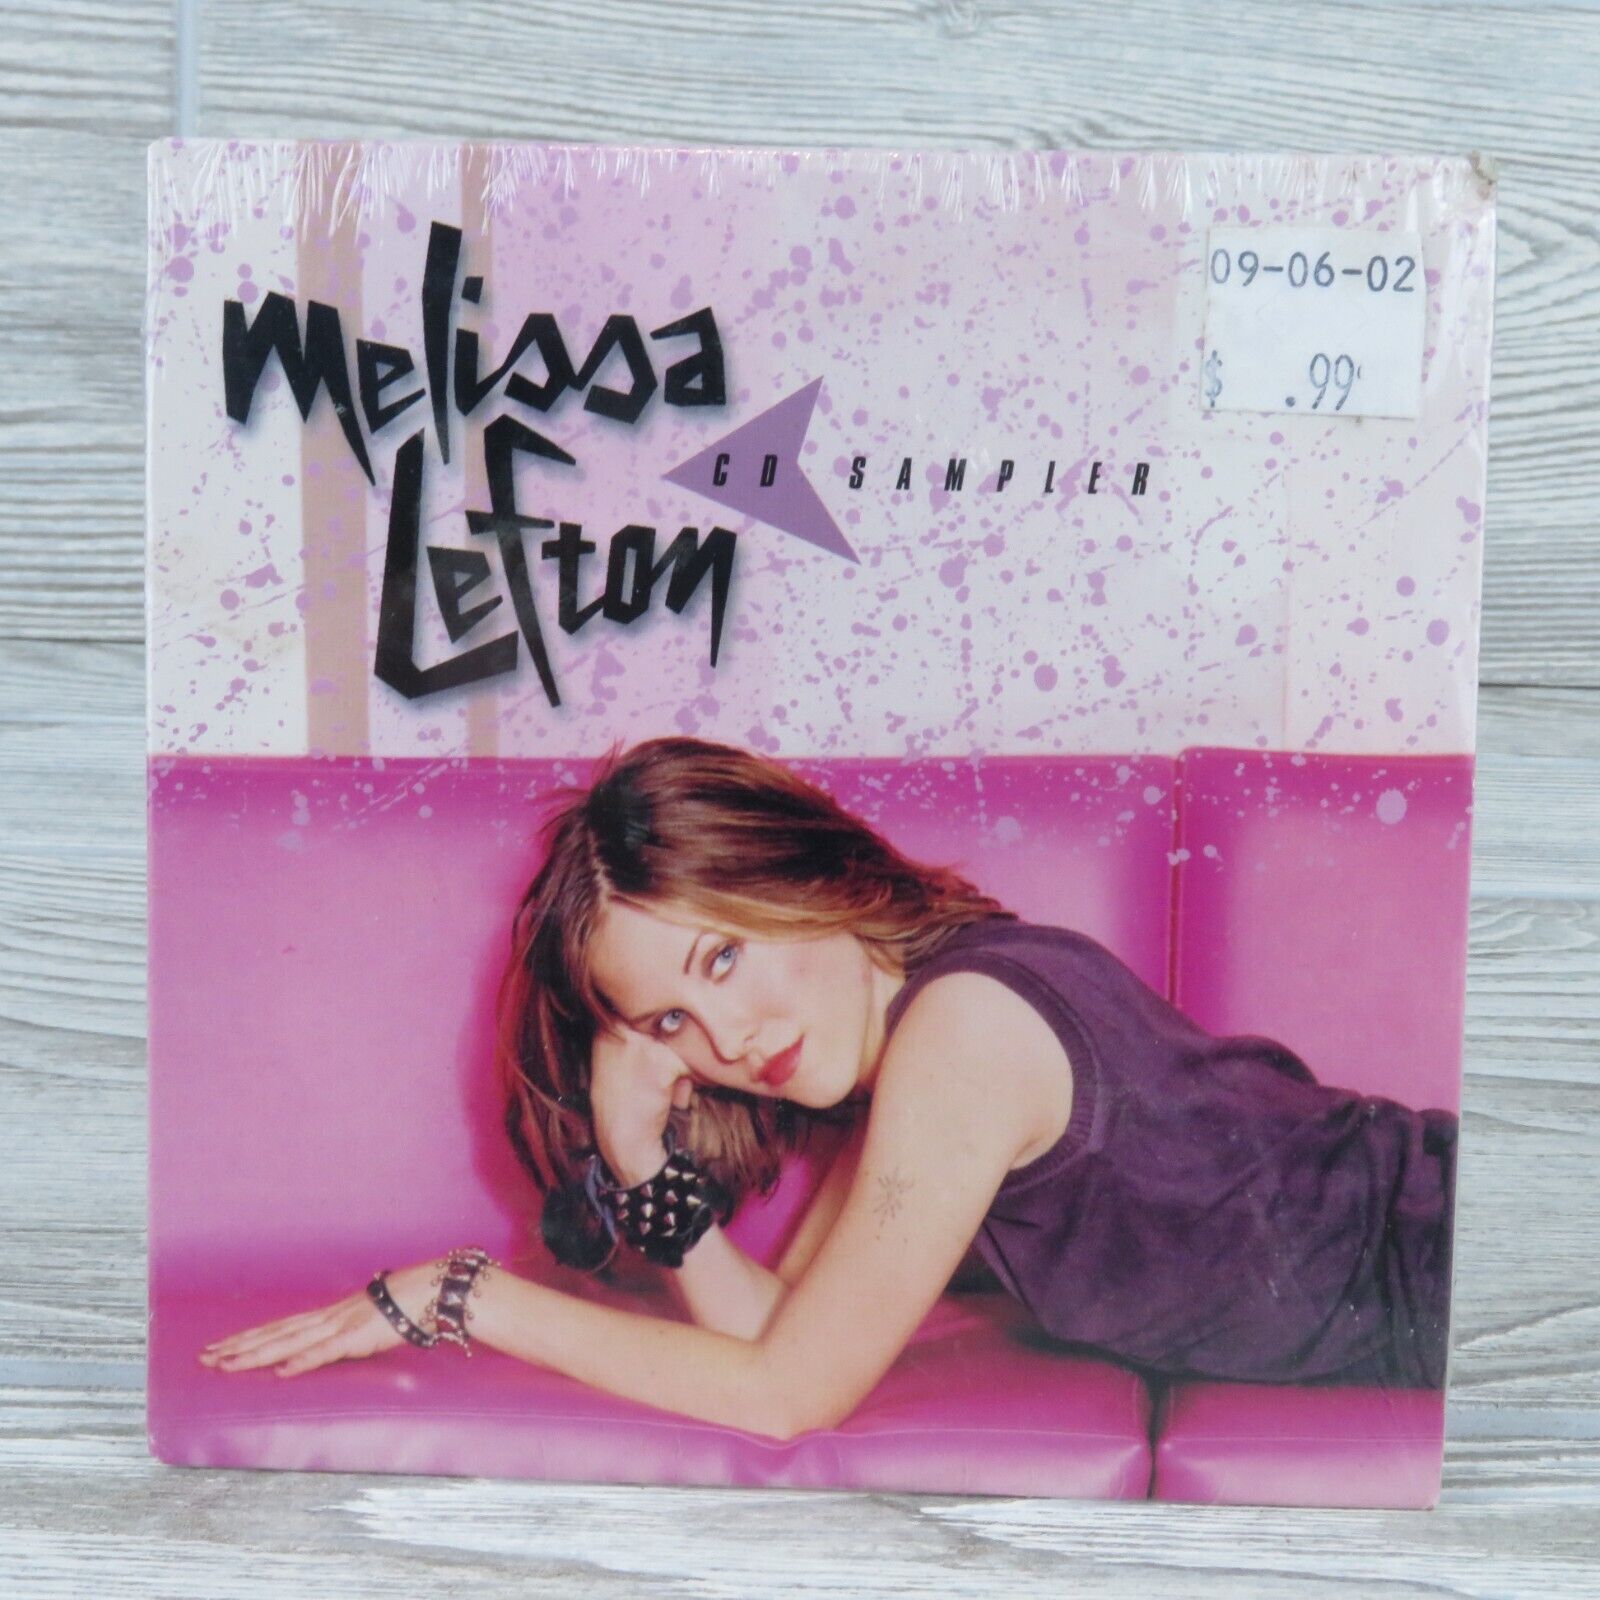 CD Sampler by Melissa Lefton (Compact Disc, 2001) Cardboard Sleeve New, Sealed